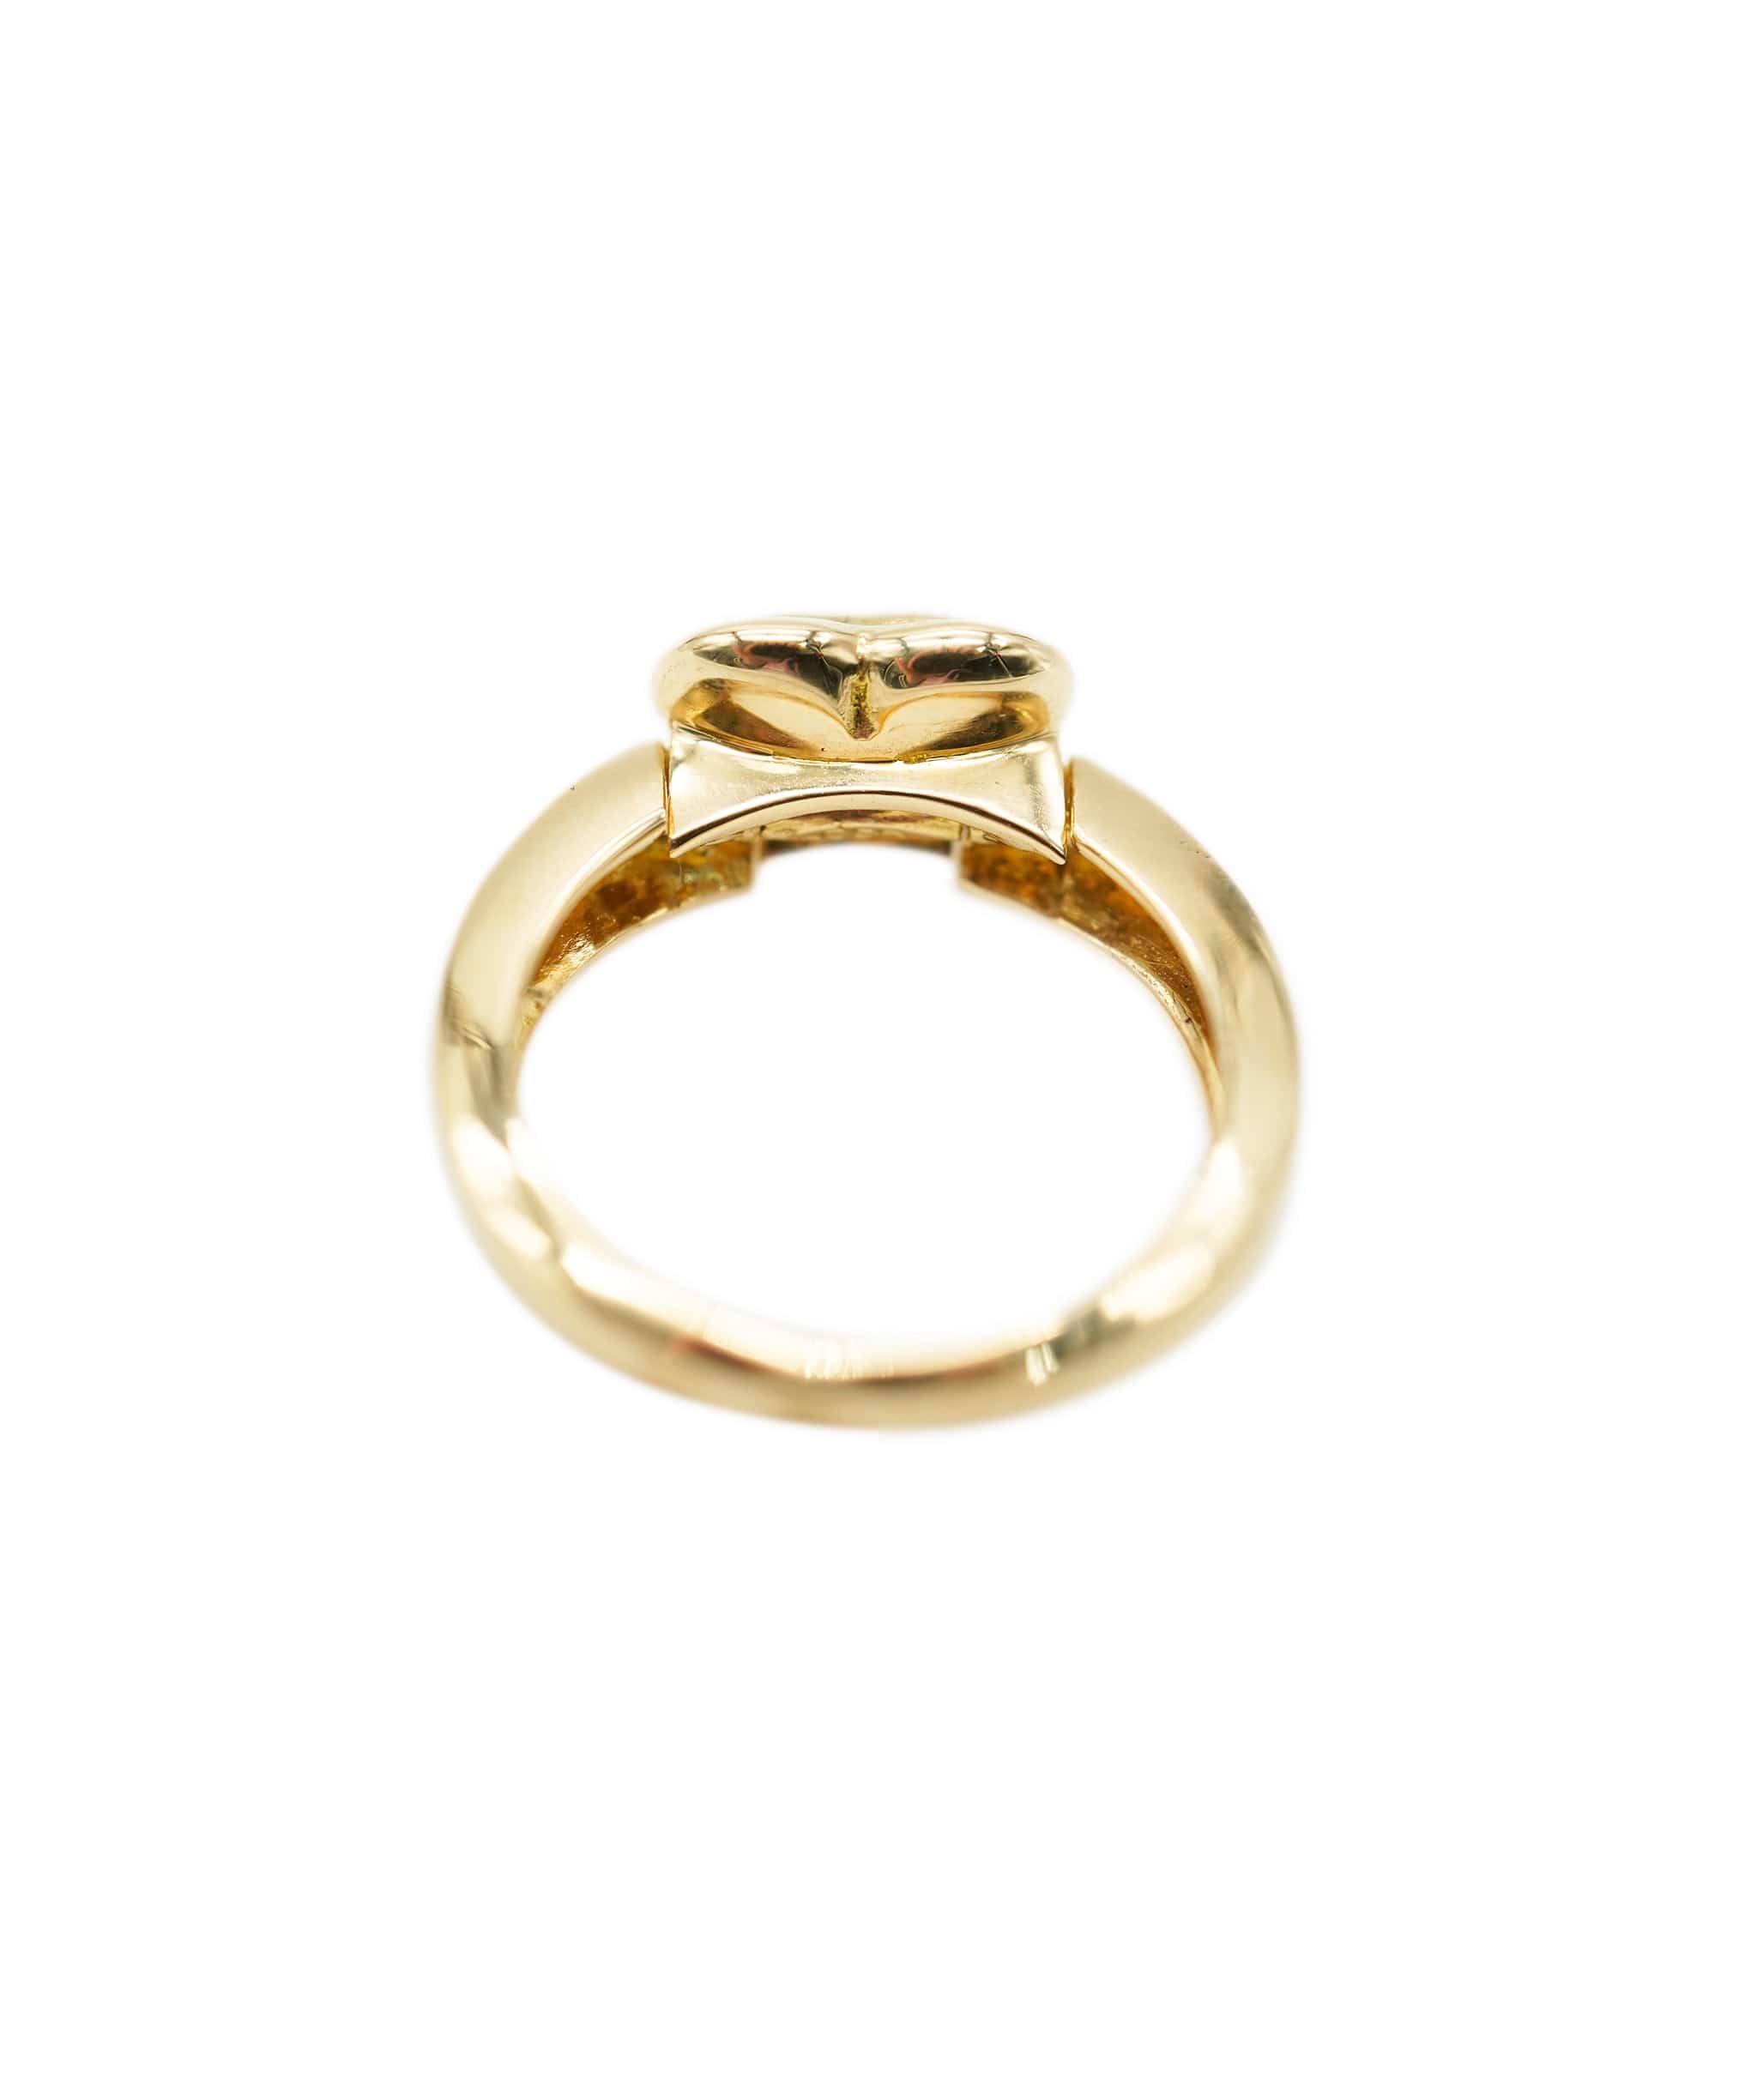 Van Cleef & Arpels Van Cleef & Arpels 18k Yellow Gold Heart Dome Ring And Pendant ASL10286